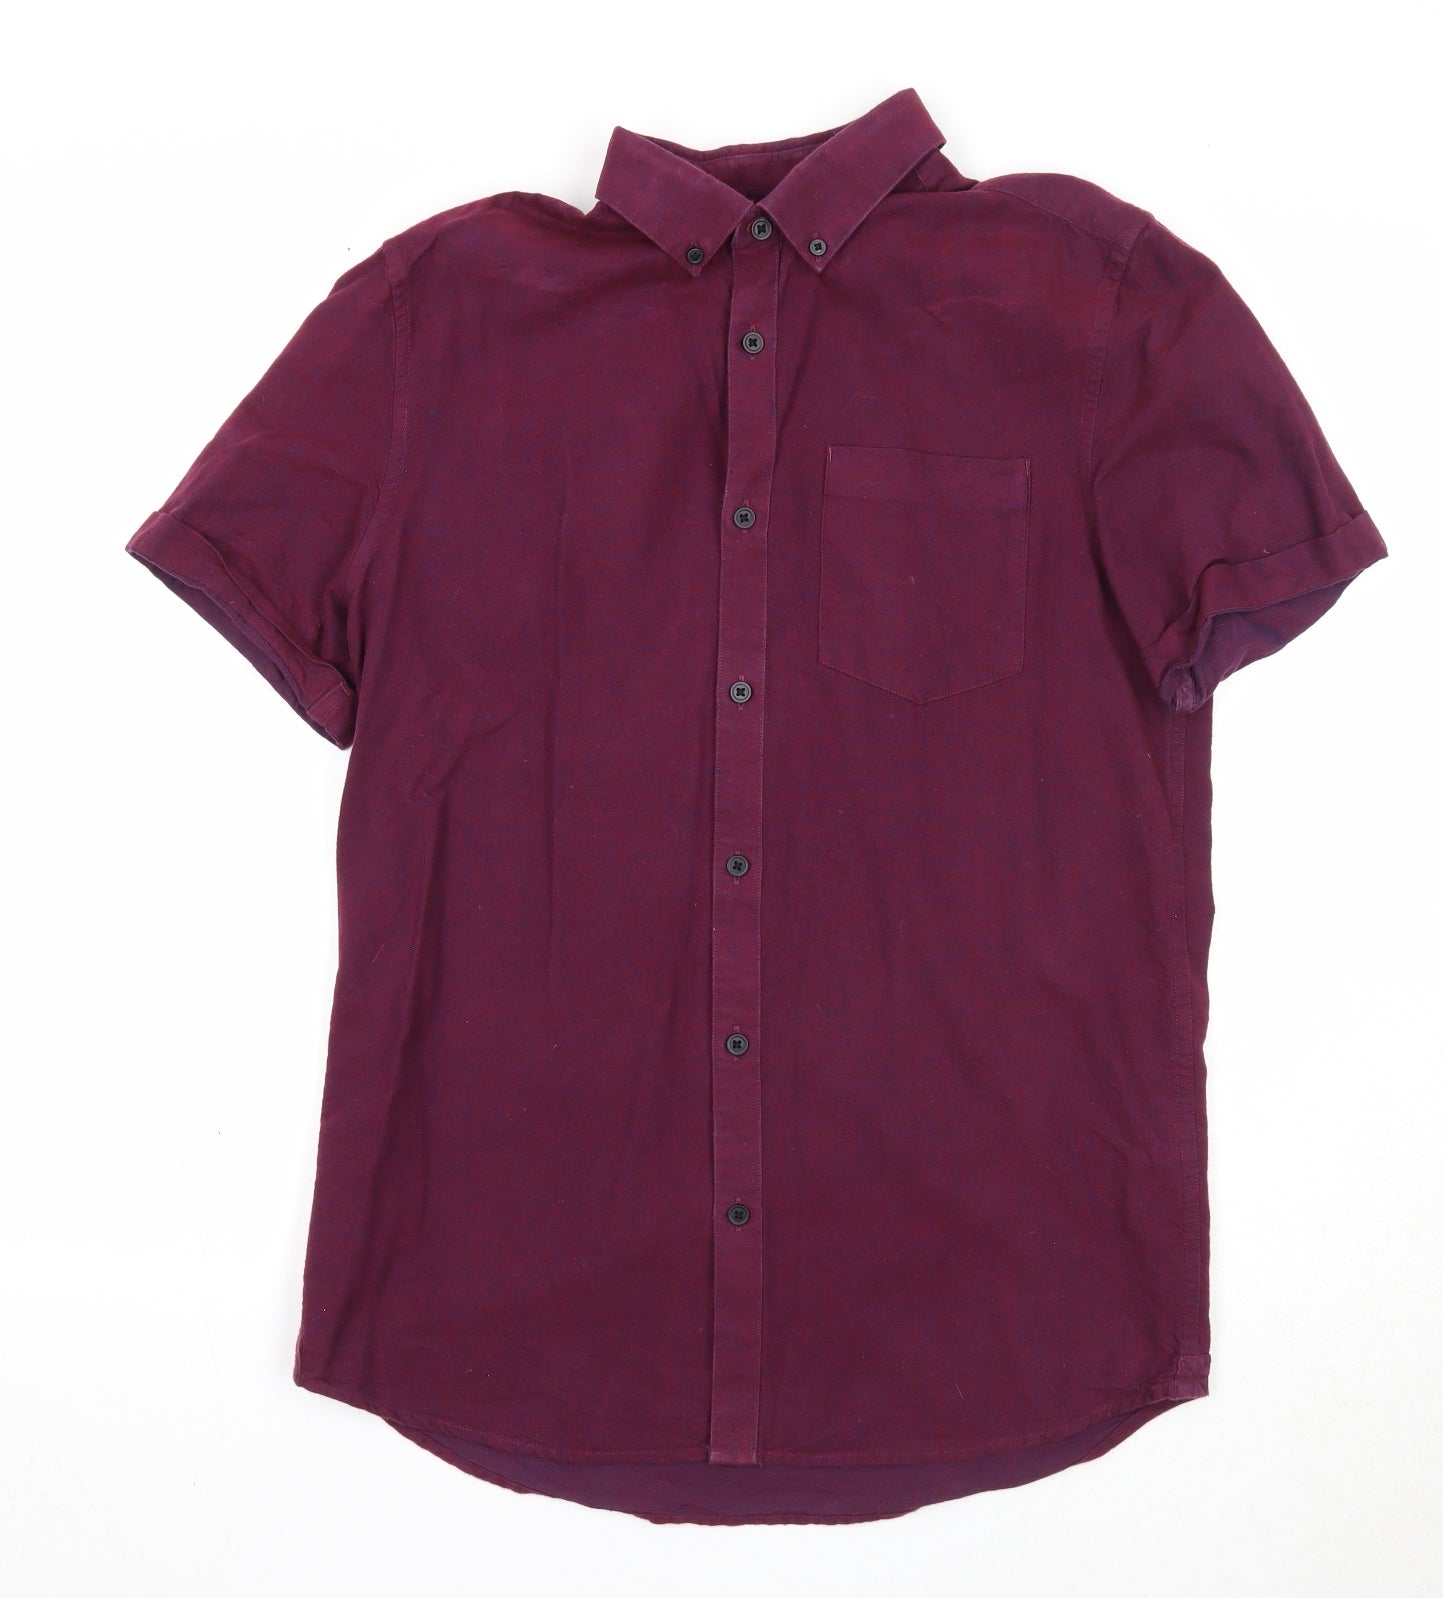 River Island Mens Purple Cotton Button-Up Size S Collared Button